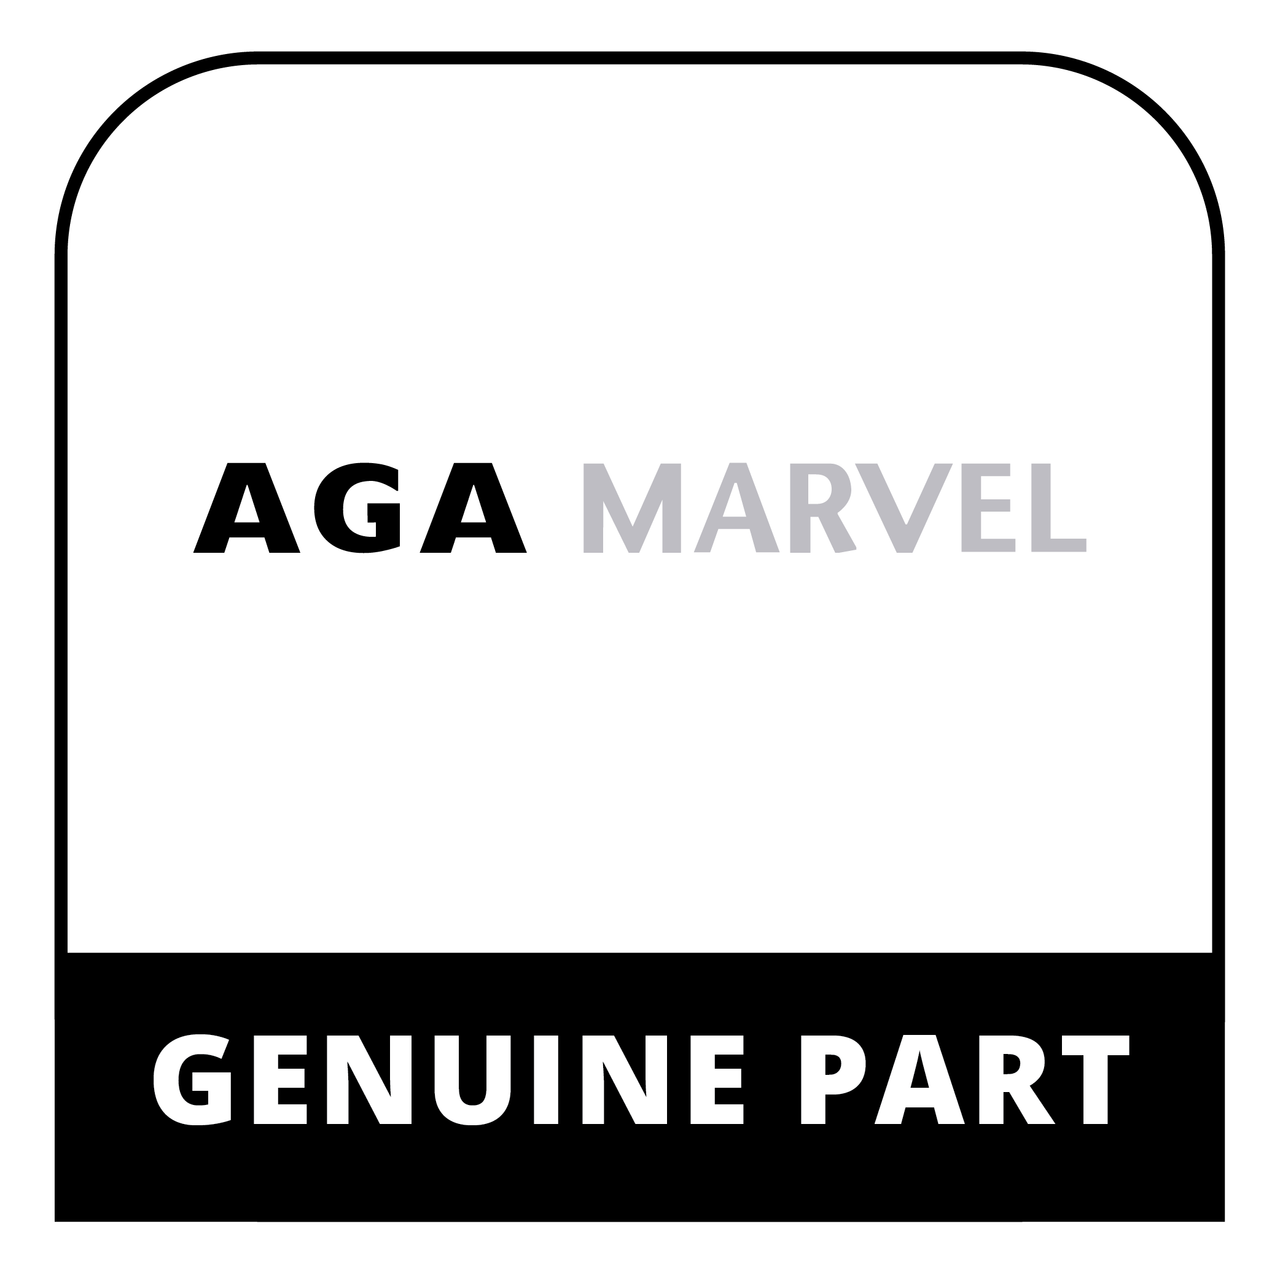 AGA Marvel S42138843-NAT - Assy-Shelf Wine Display Mlwc224 - Genuine AGA Marvel Part